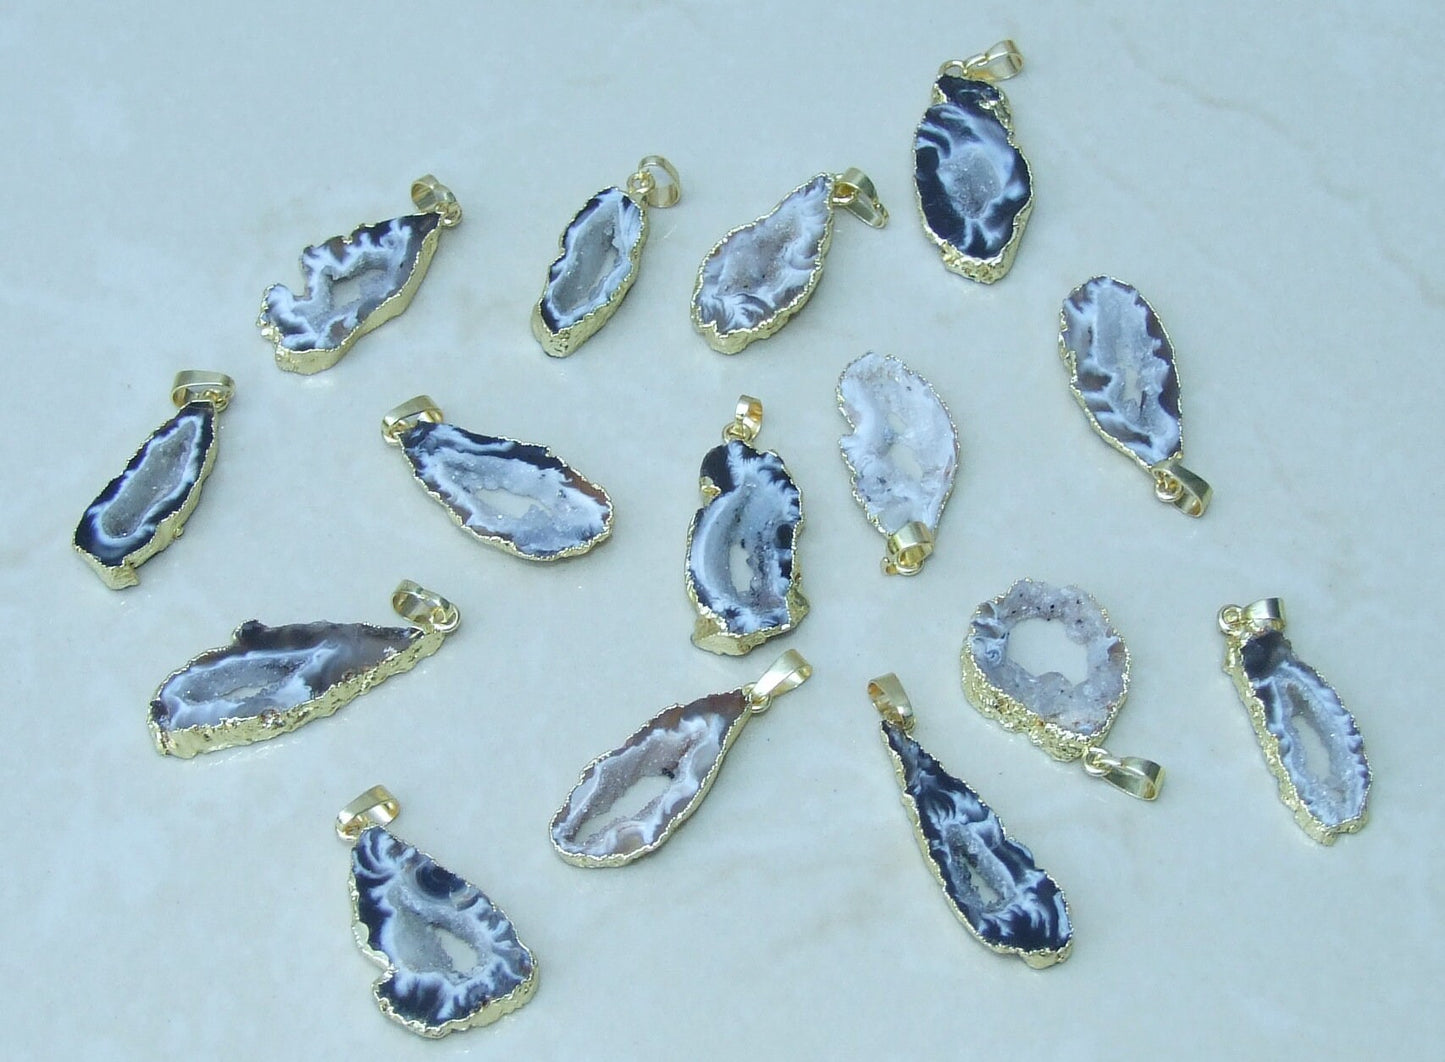 Druzy Pendant, Agate Slice, Geode Pendant, Gemstone Pendant, Druzy Necklace, Druzy Quartz, Large Geode, Druzy Charm, Geode Jewelry, 30/40mm